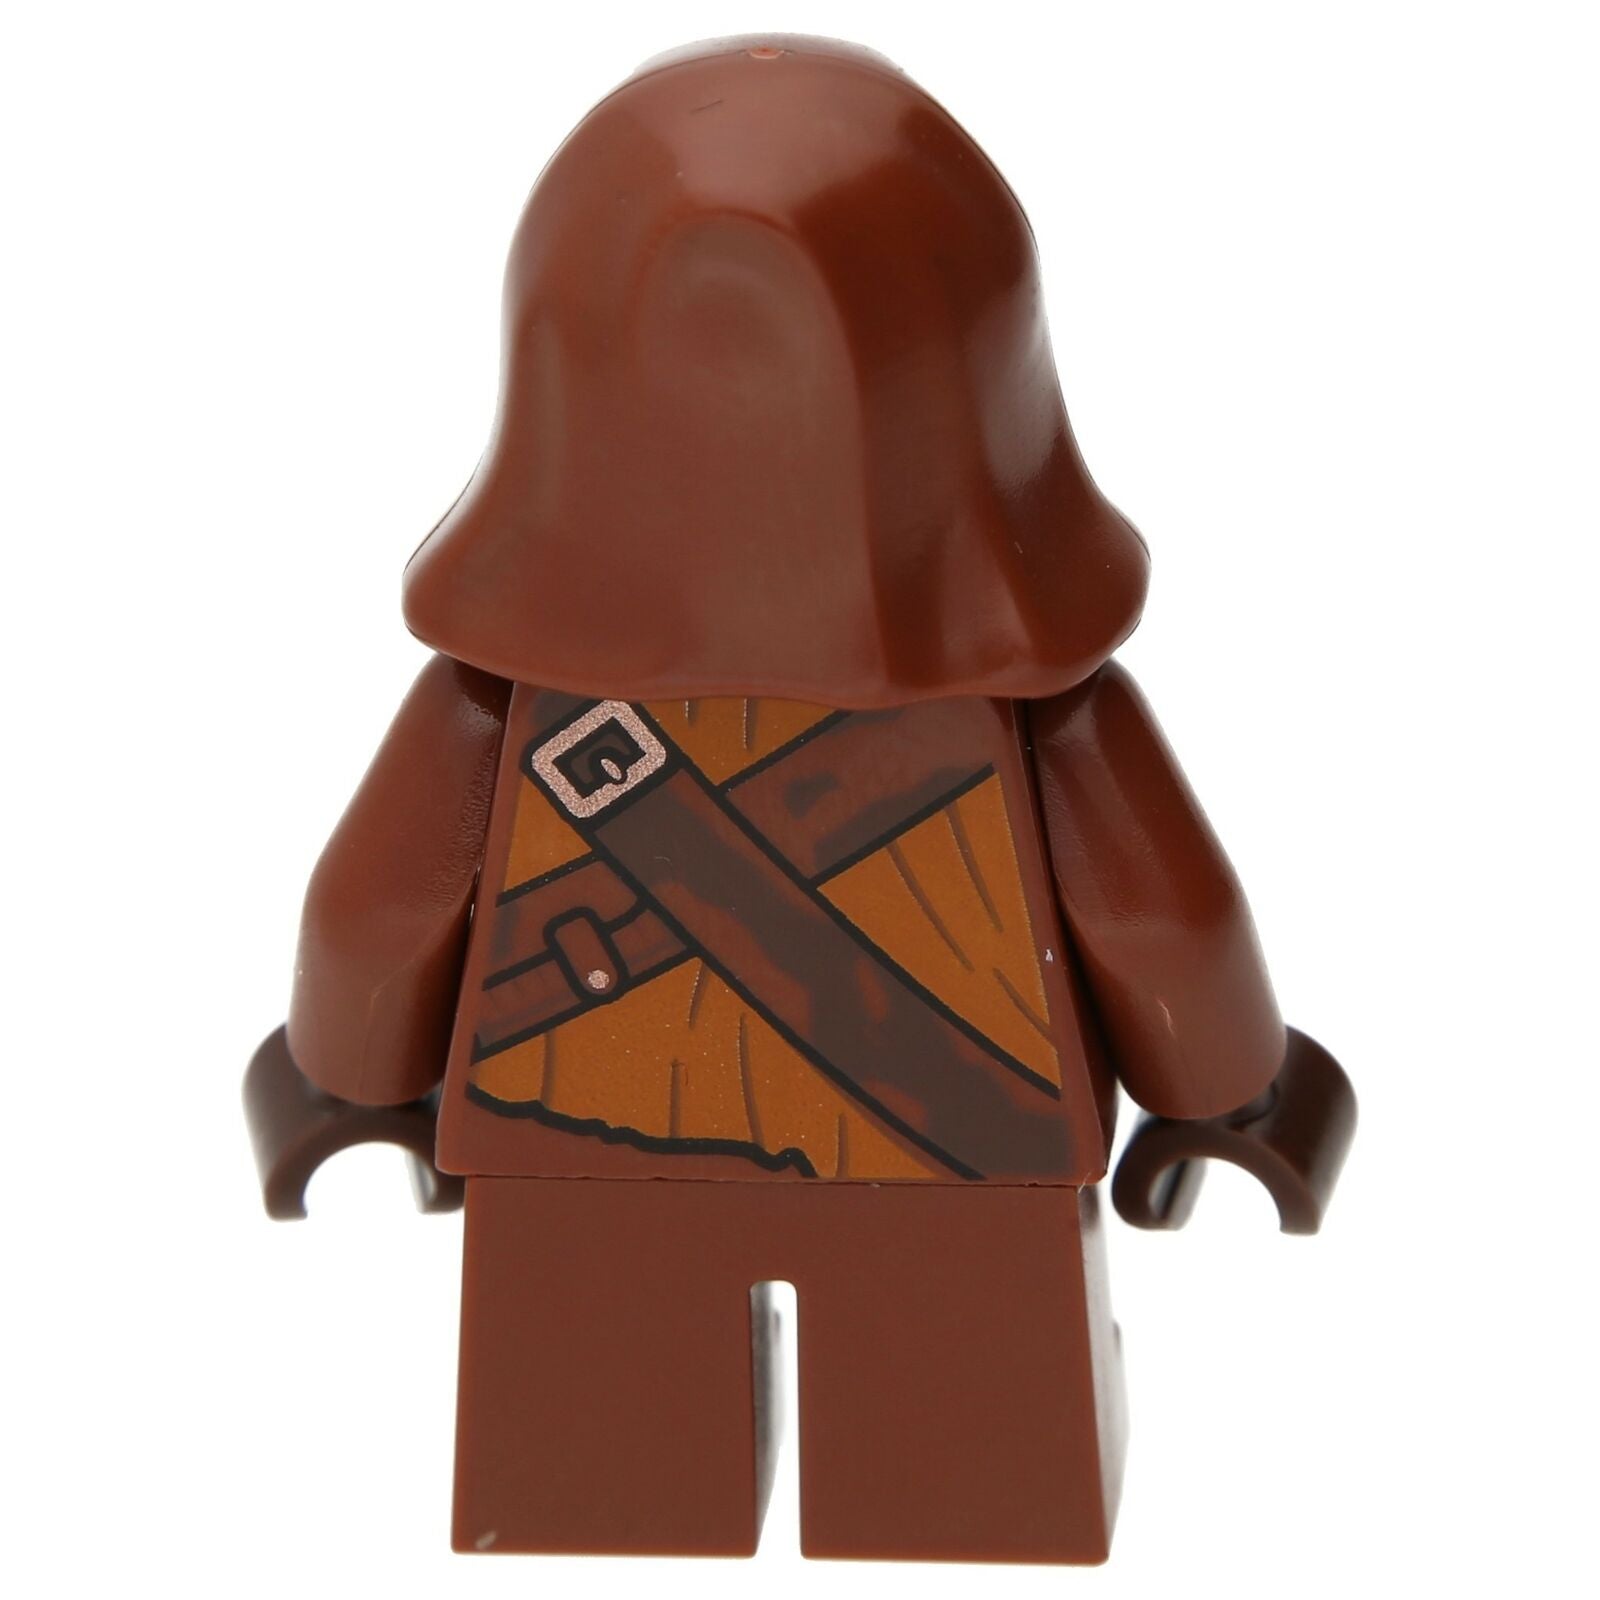 LEGO Star Wars Minifigure - Jawa (torn shirt)